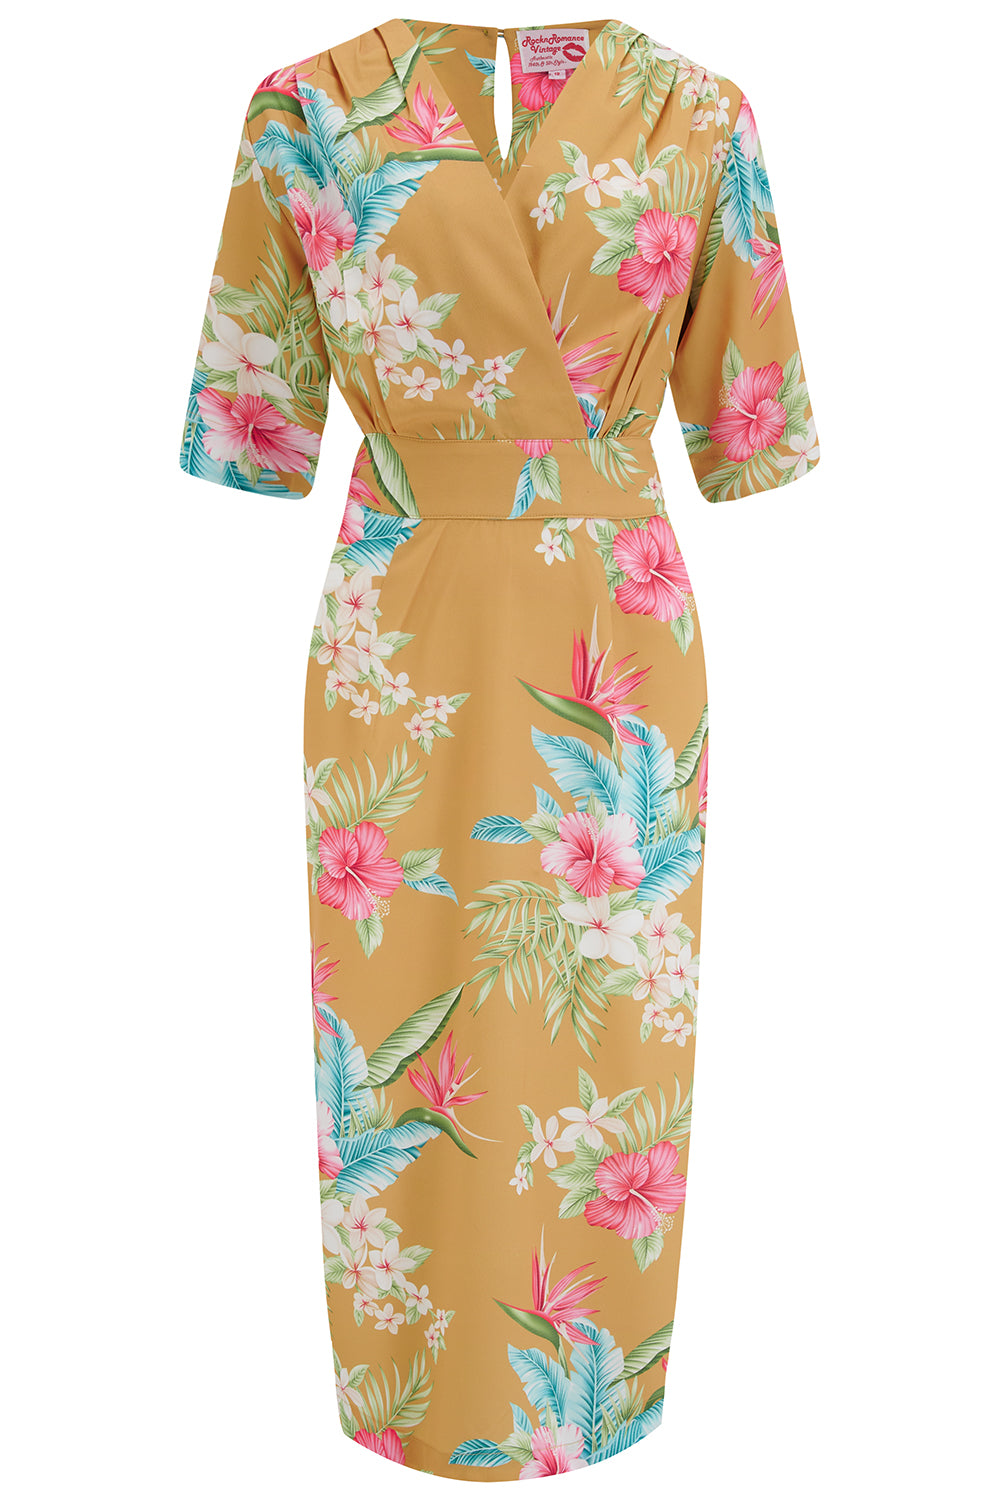 **Sample Sale** The “Evelyn" Wiggle Dress in Mustard Honolulu, True 1940s Early 50s Vintage Style